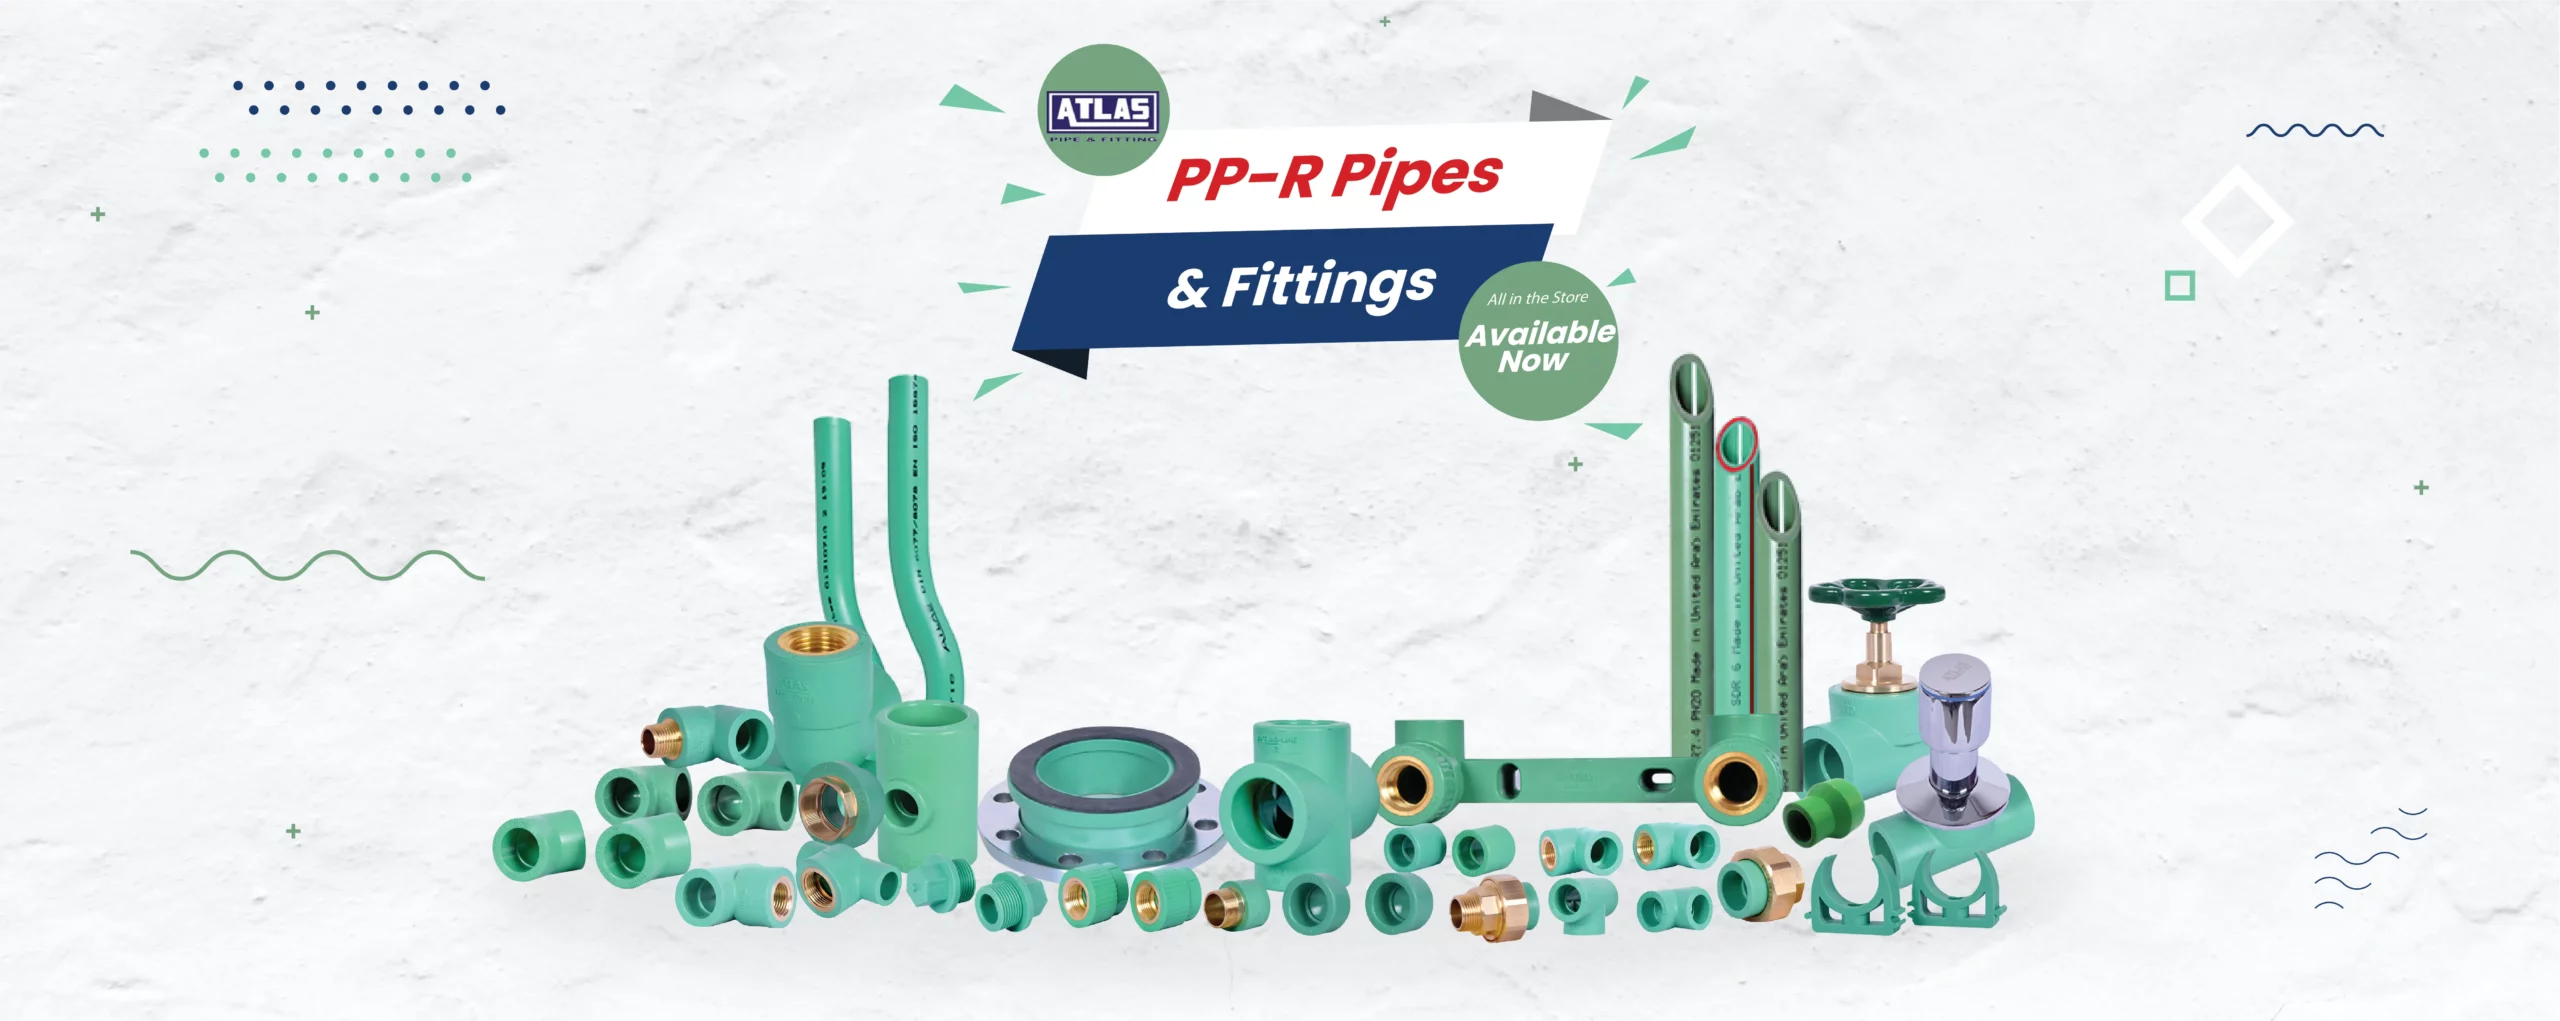 PP-R Pipes & Fittings - Albirco